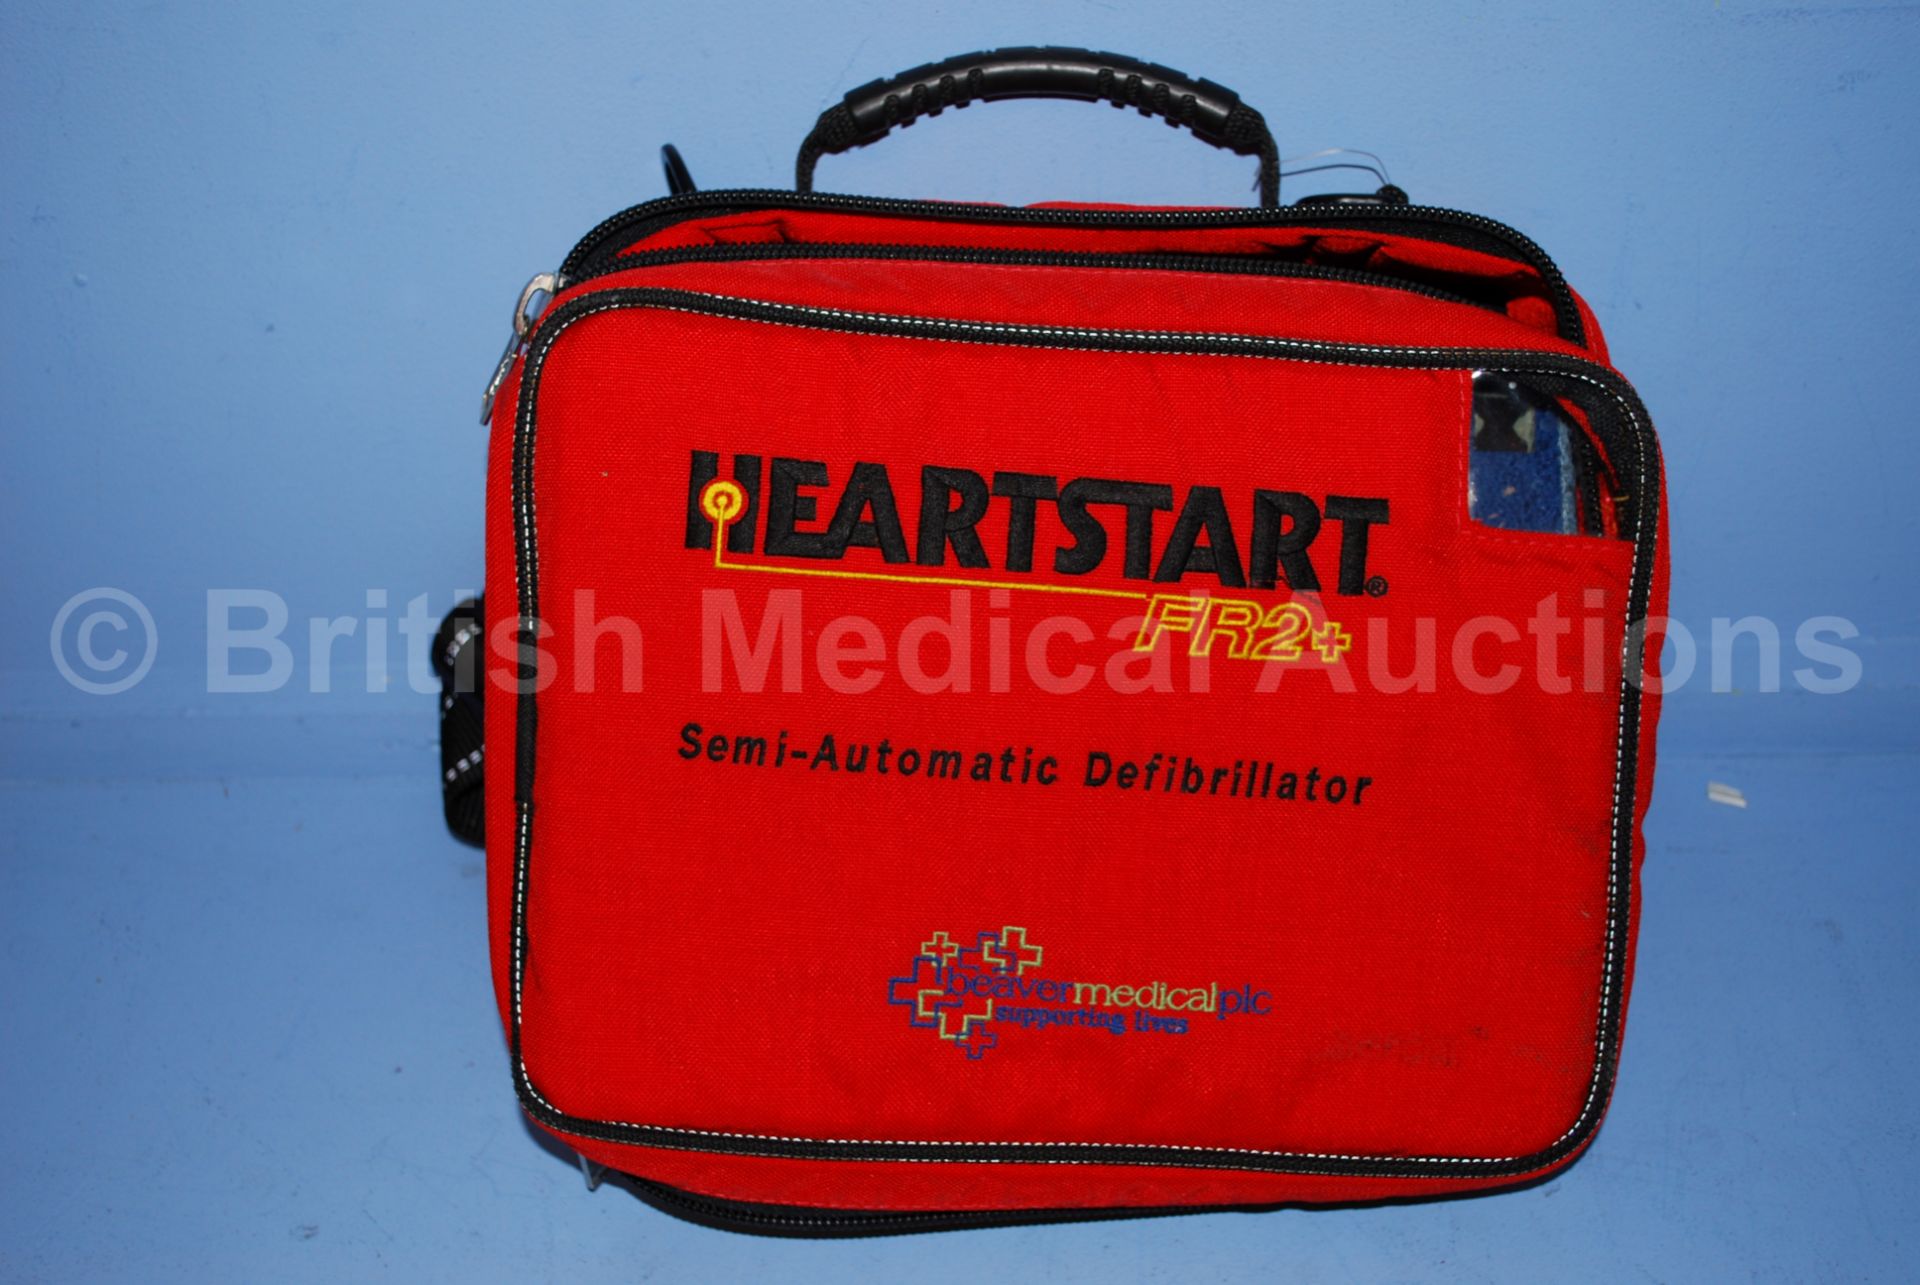 Philips Hearstart FR2+ Defibrillator in Red Case ( - Image 4 of 4